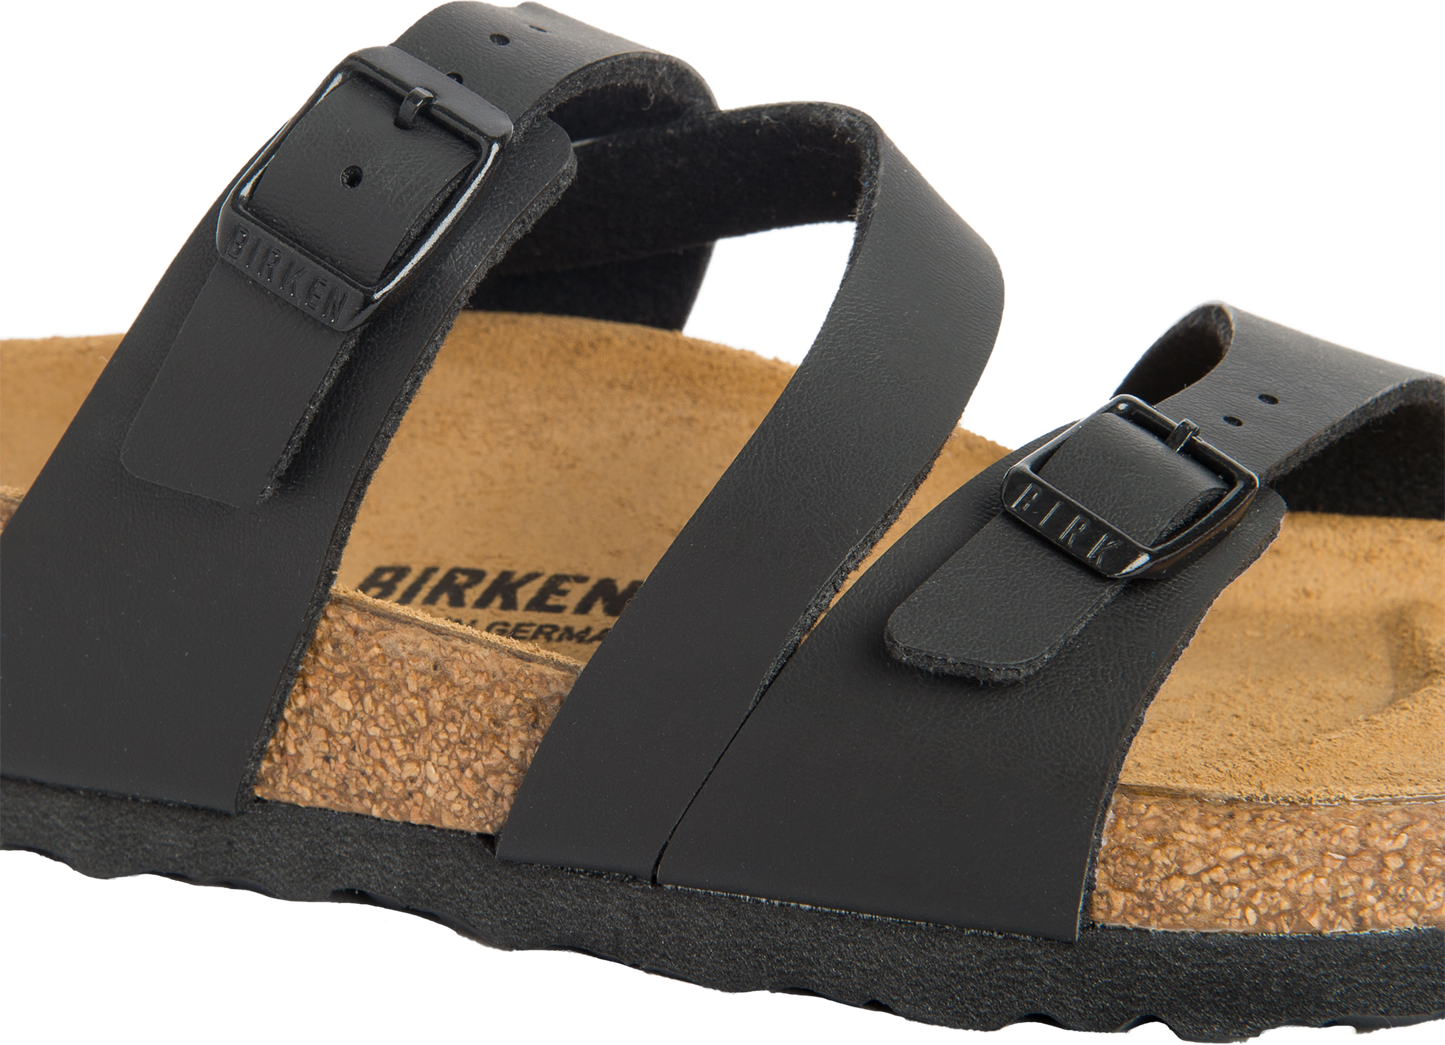 Birkenstock Sandals Salina Birko-flor Black - Regular Fit